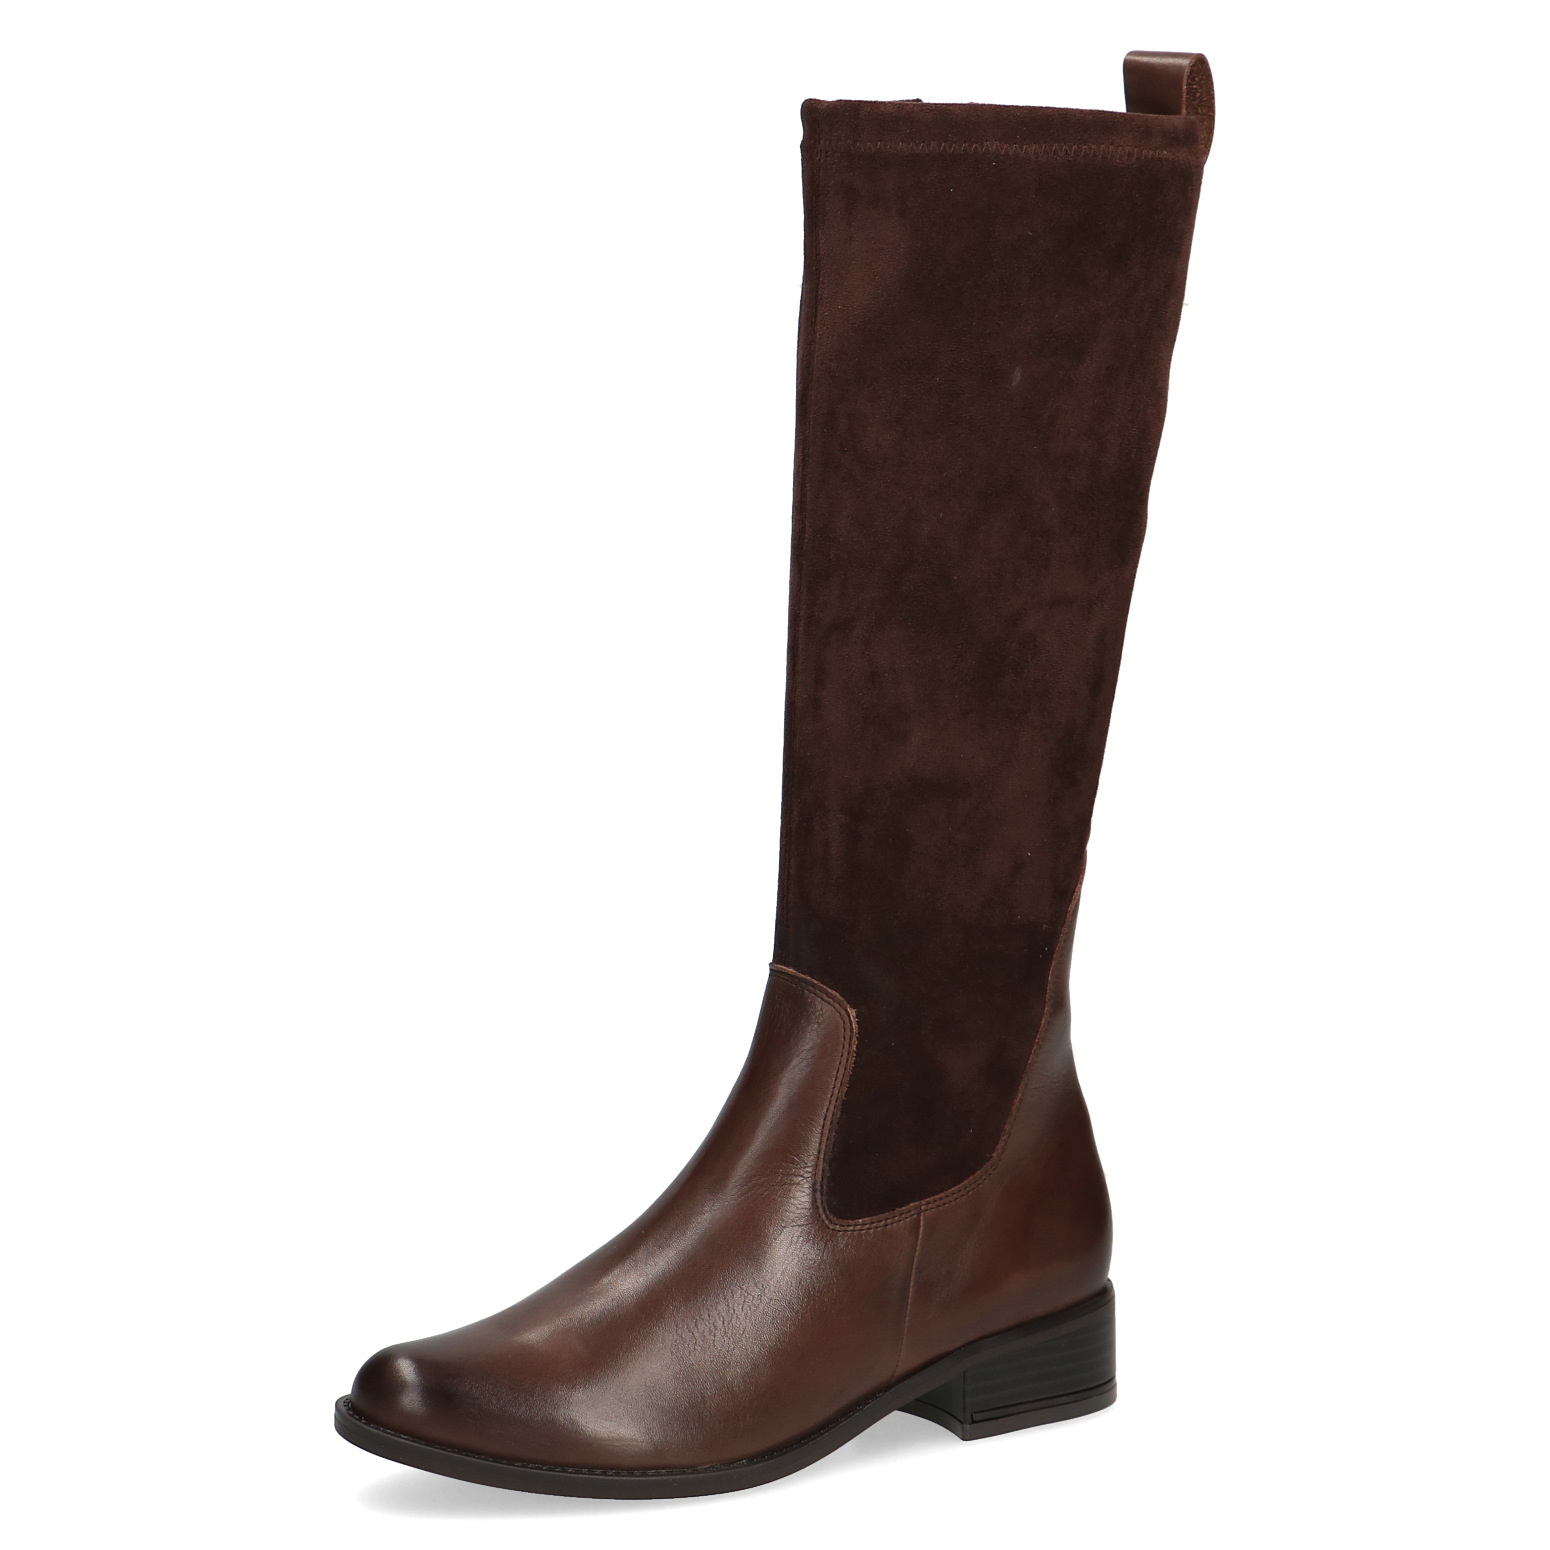 Caprice Stiefel - Dark brown Leather/Textile